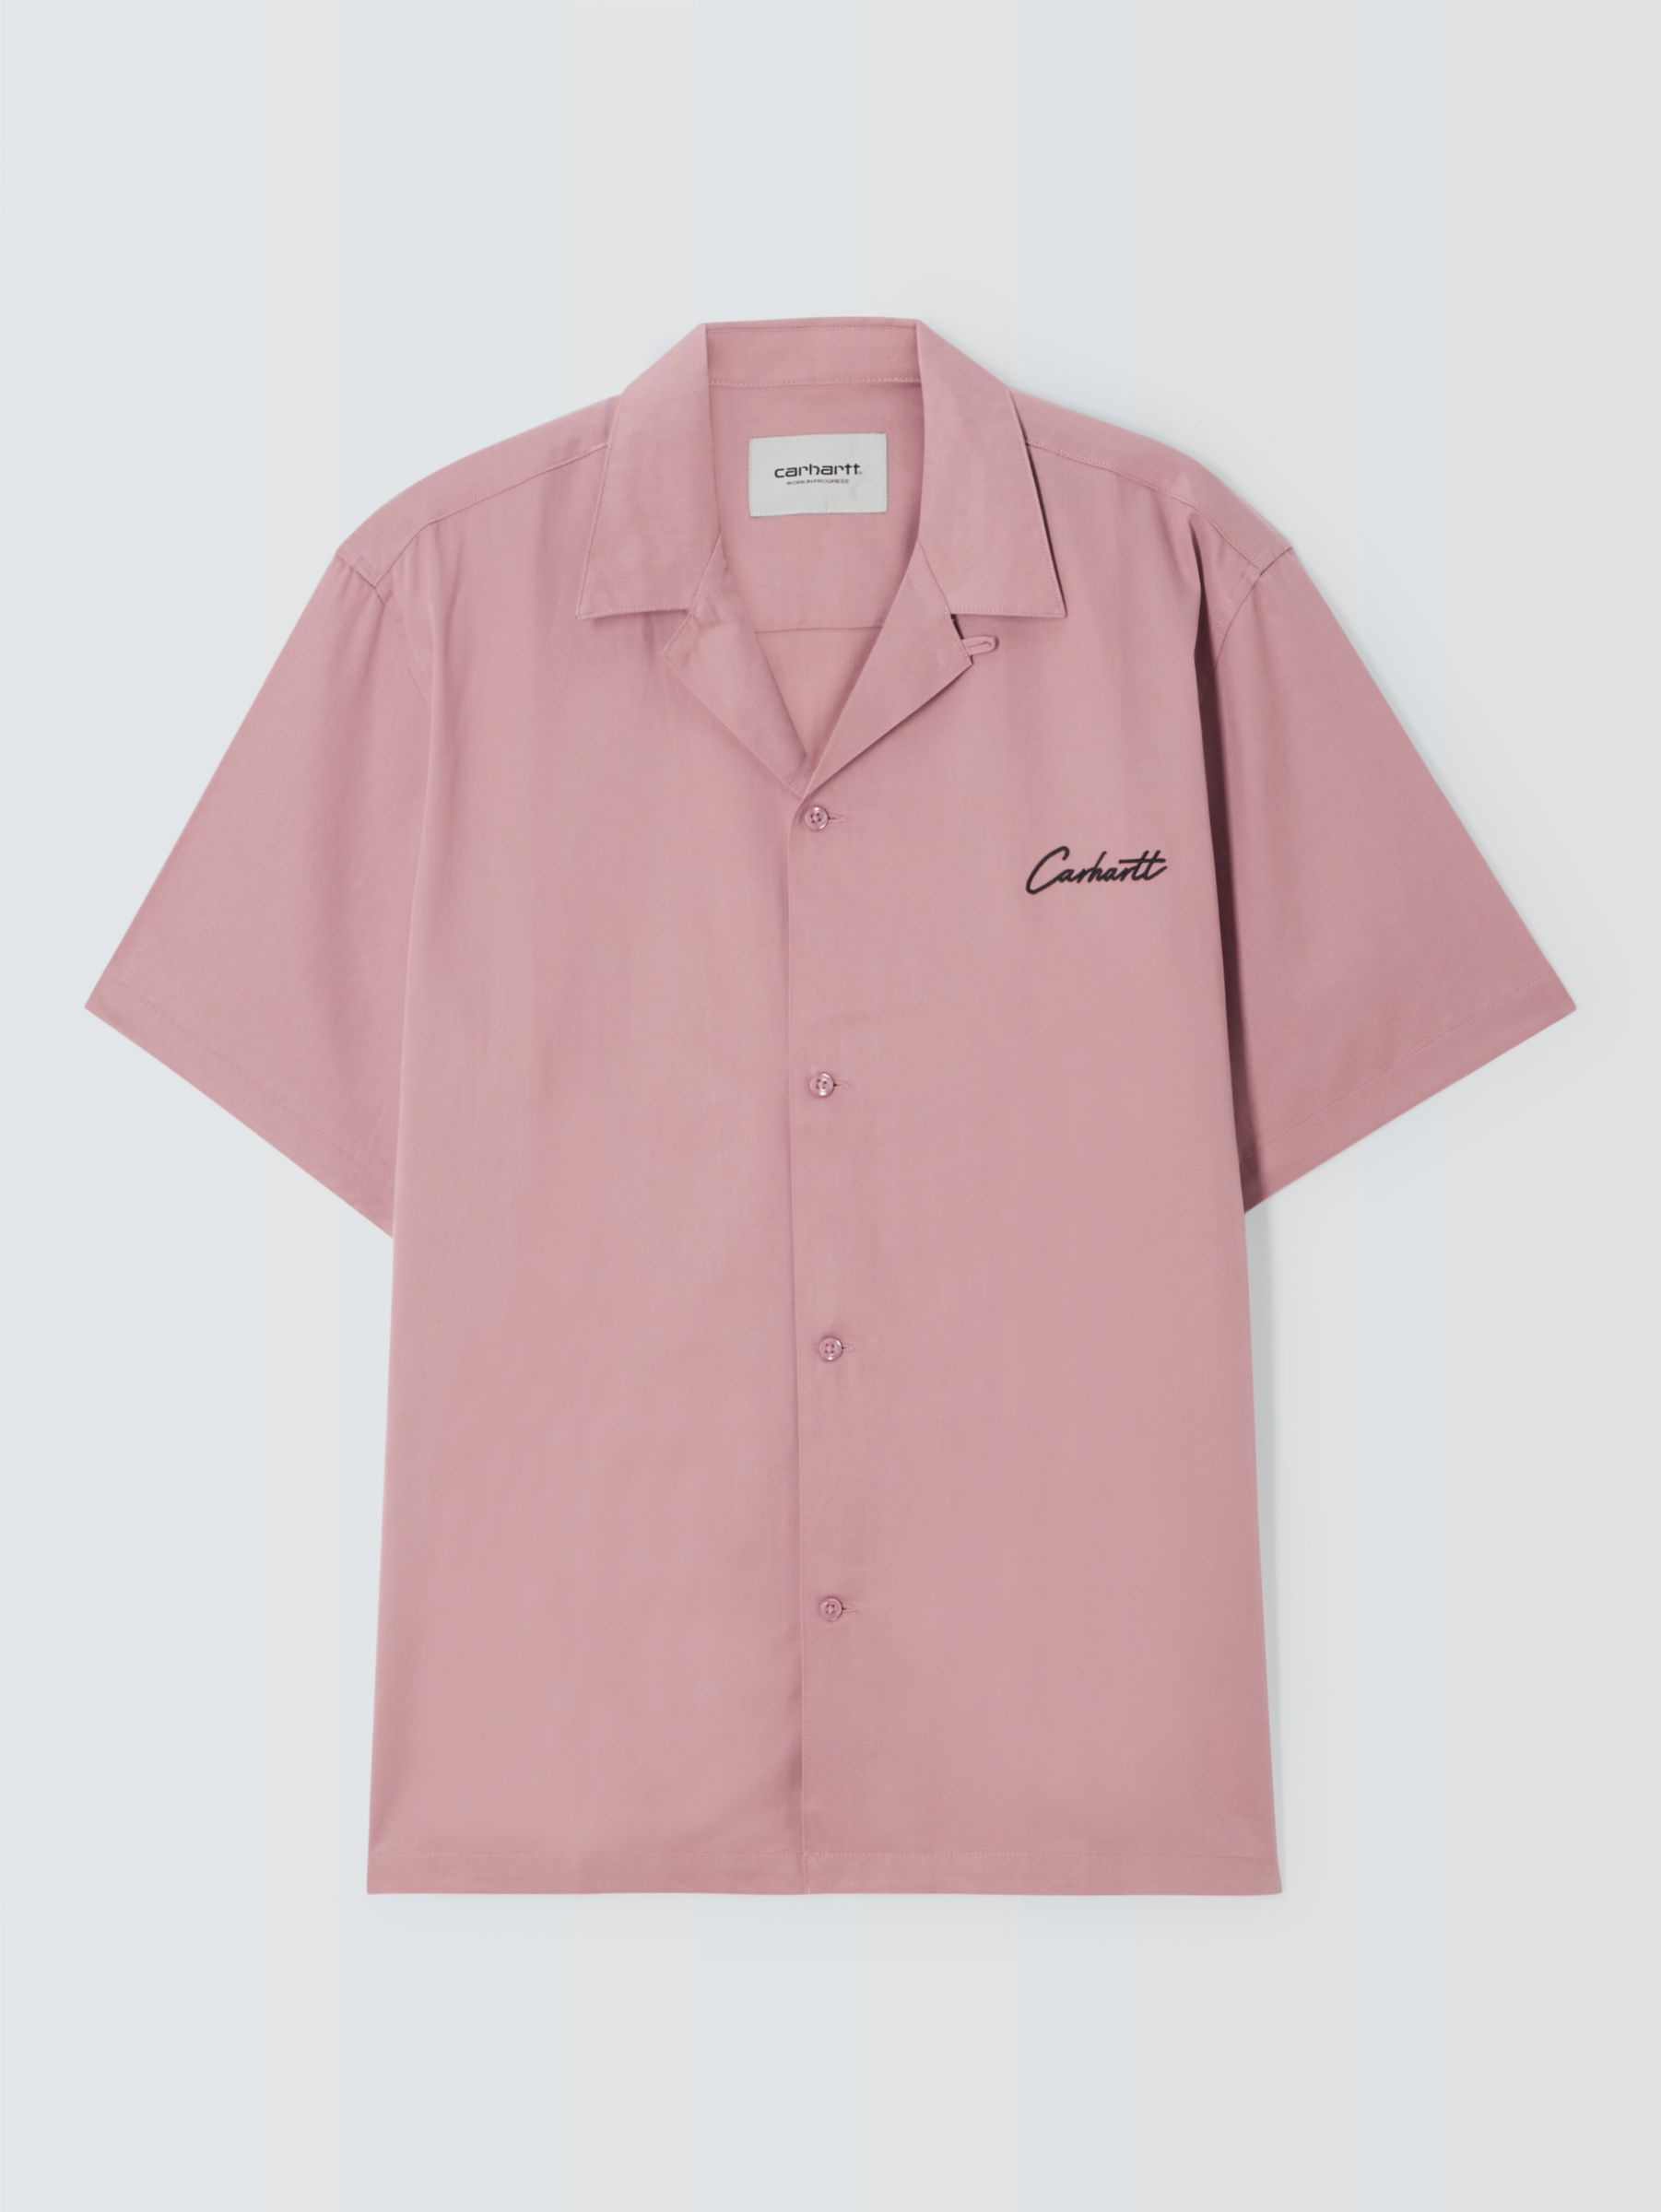 Carhartt WIP Delray Loose Fit Shirt, Glassy Pink/Black, S